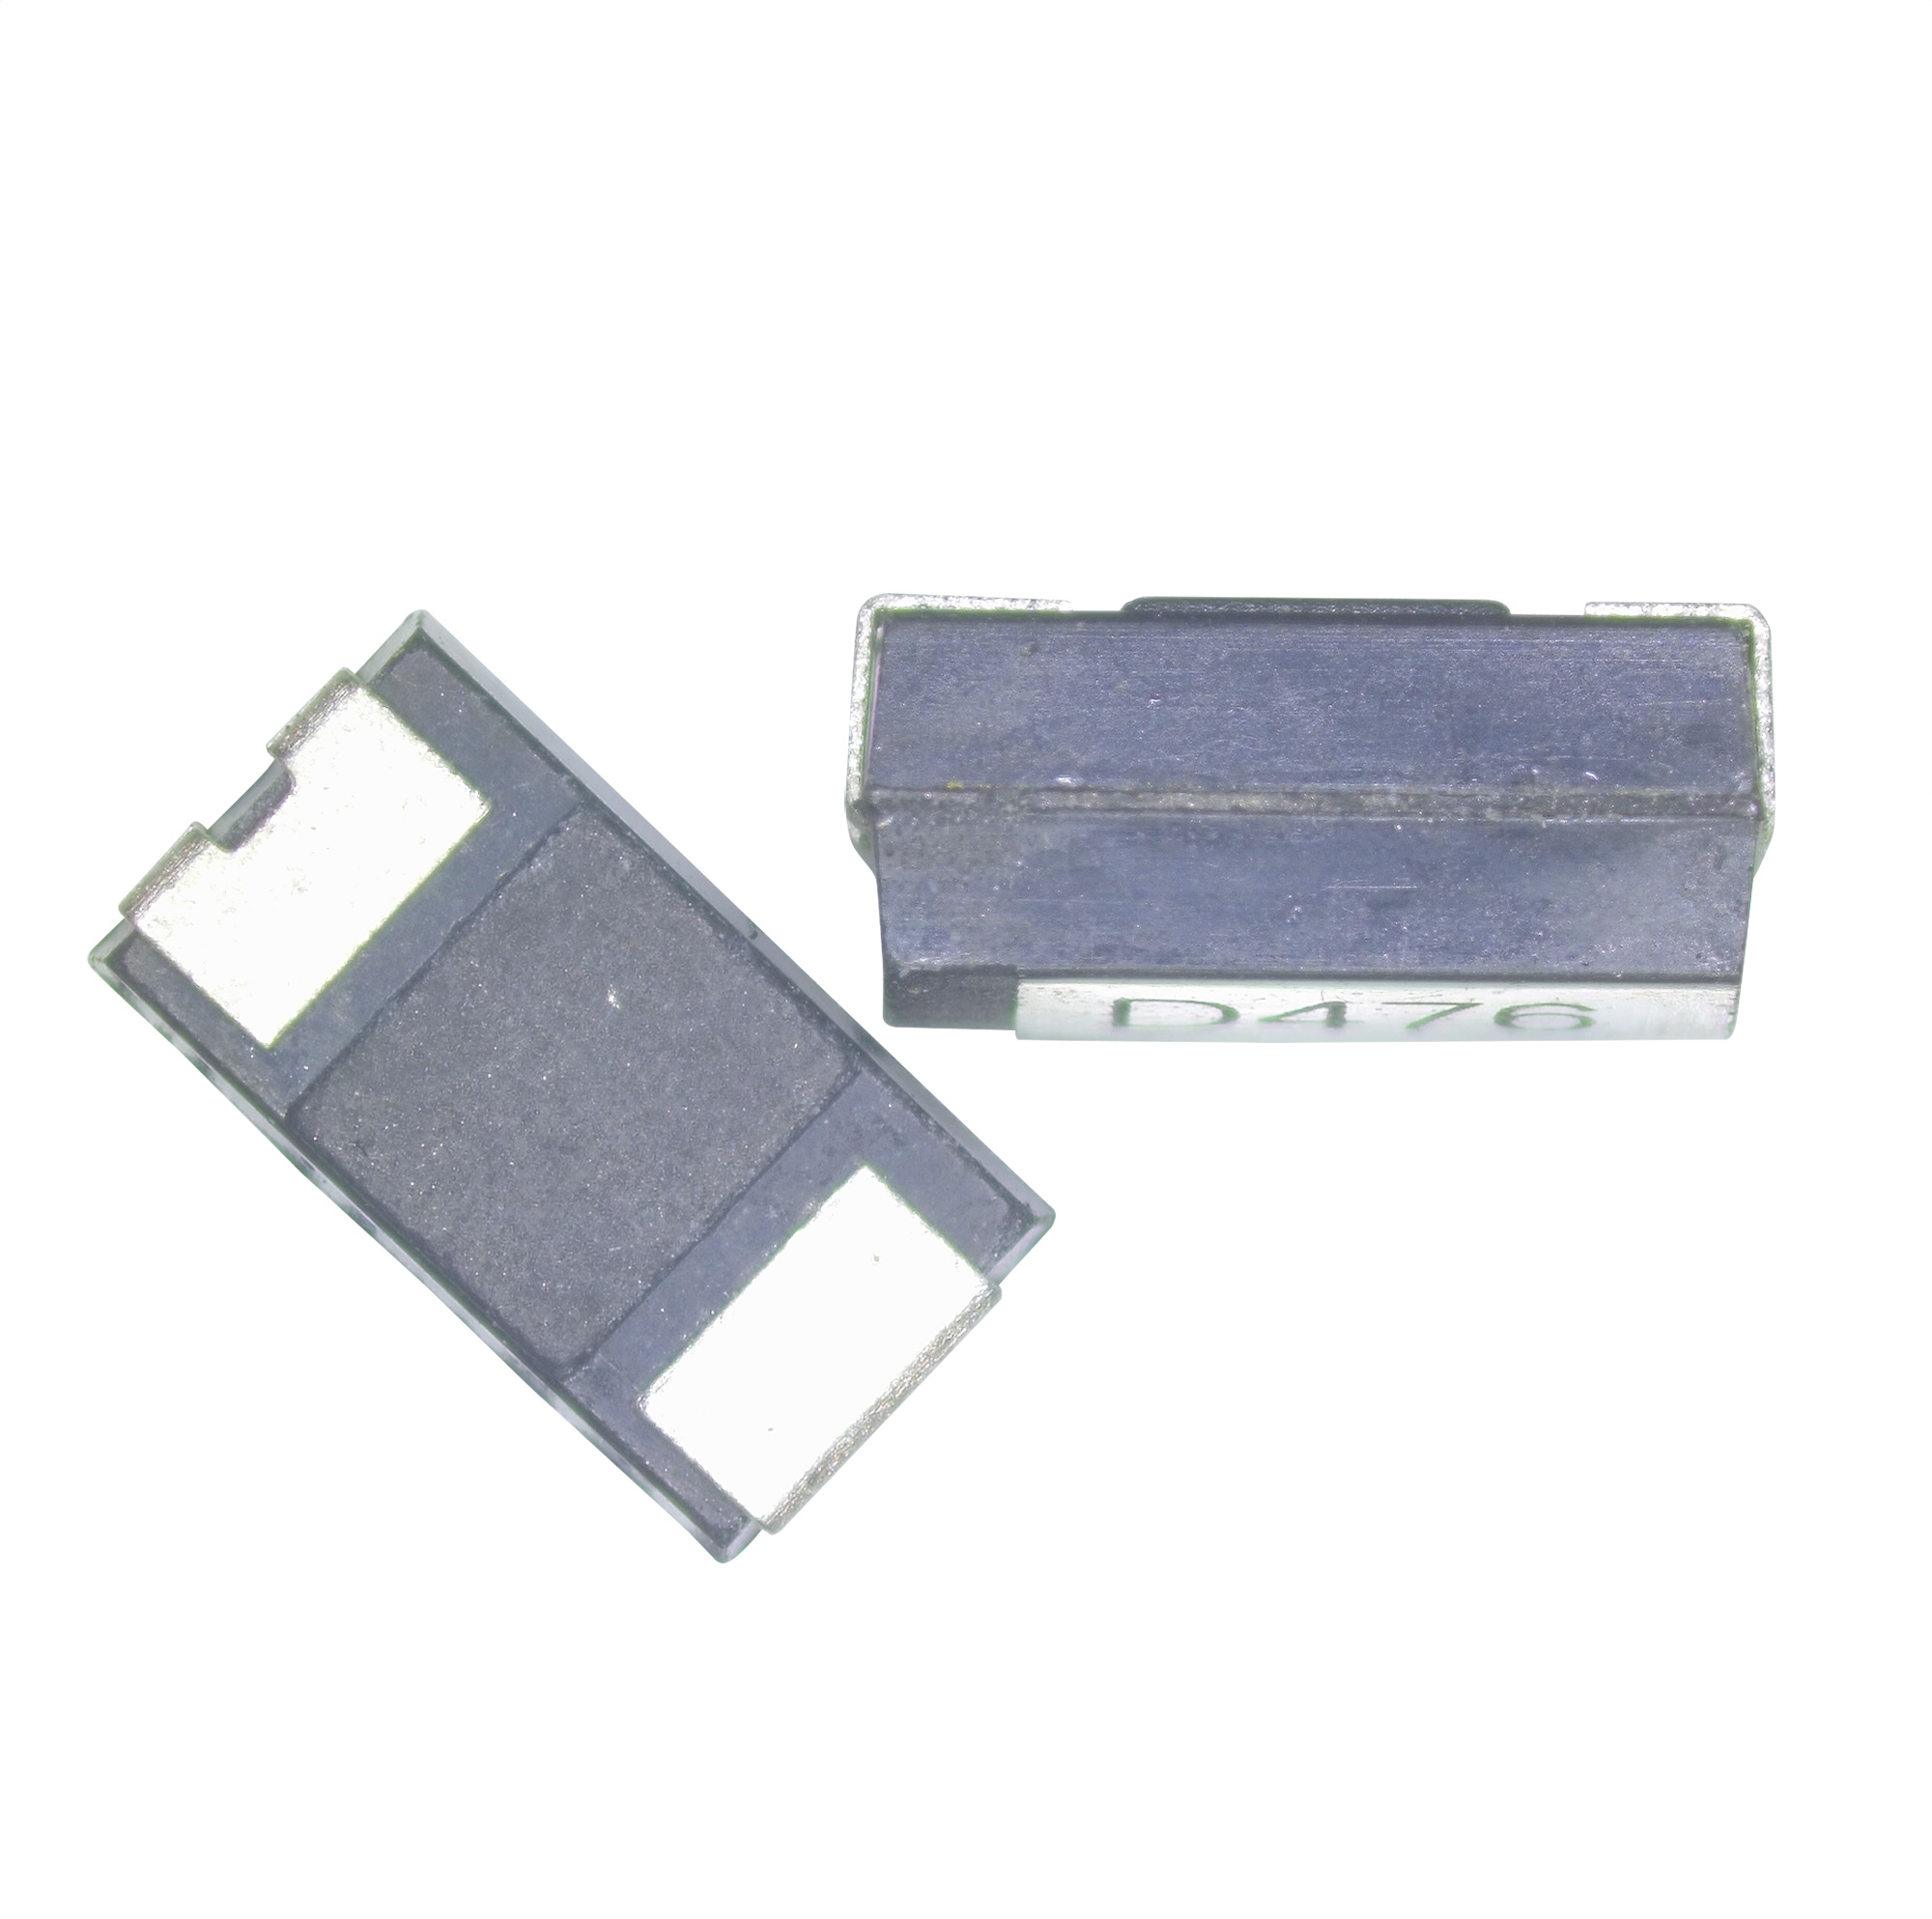 High temperature resistant conductive polymer chip tantalum capacitor